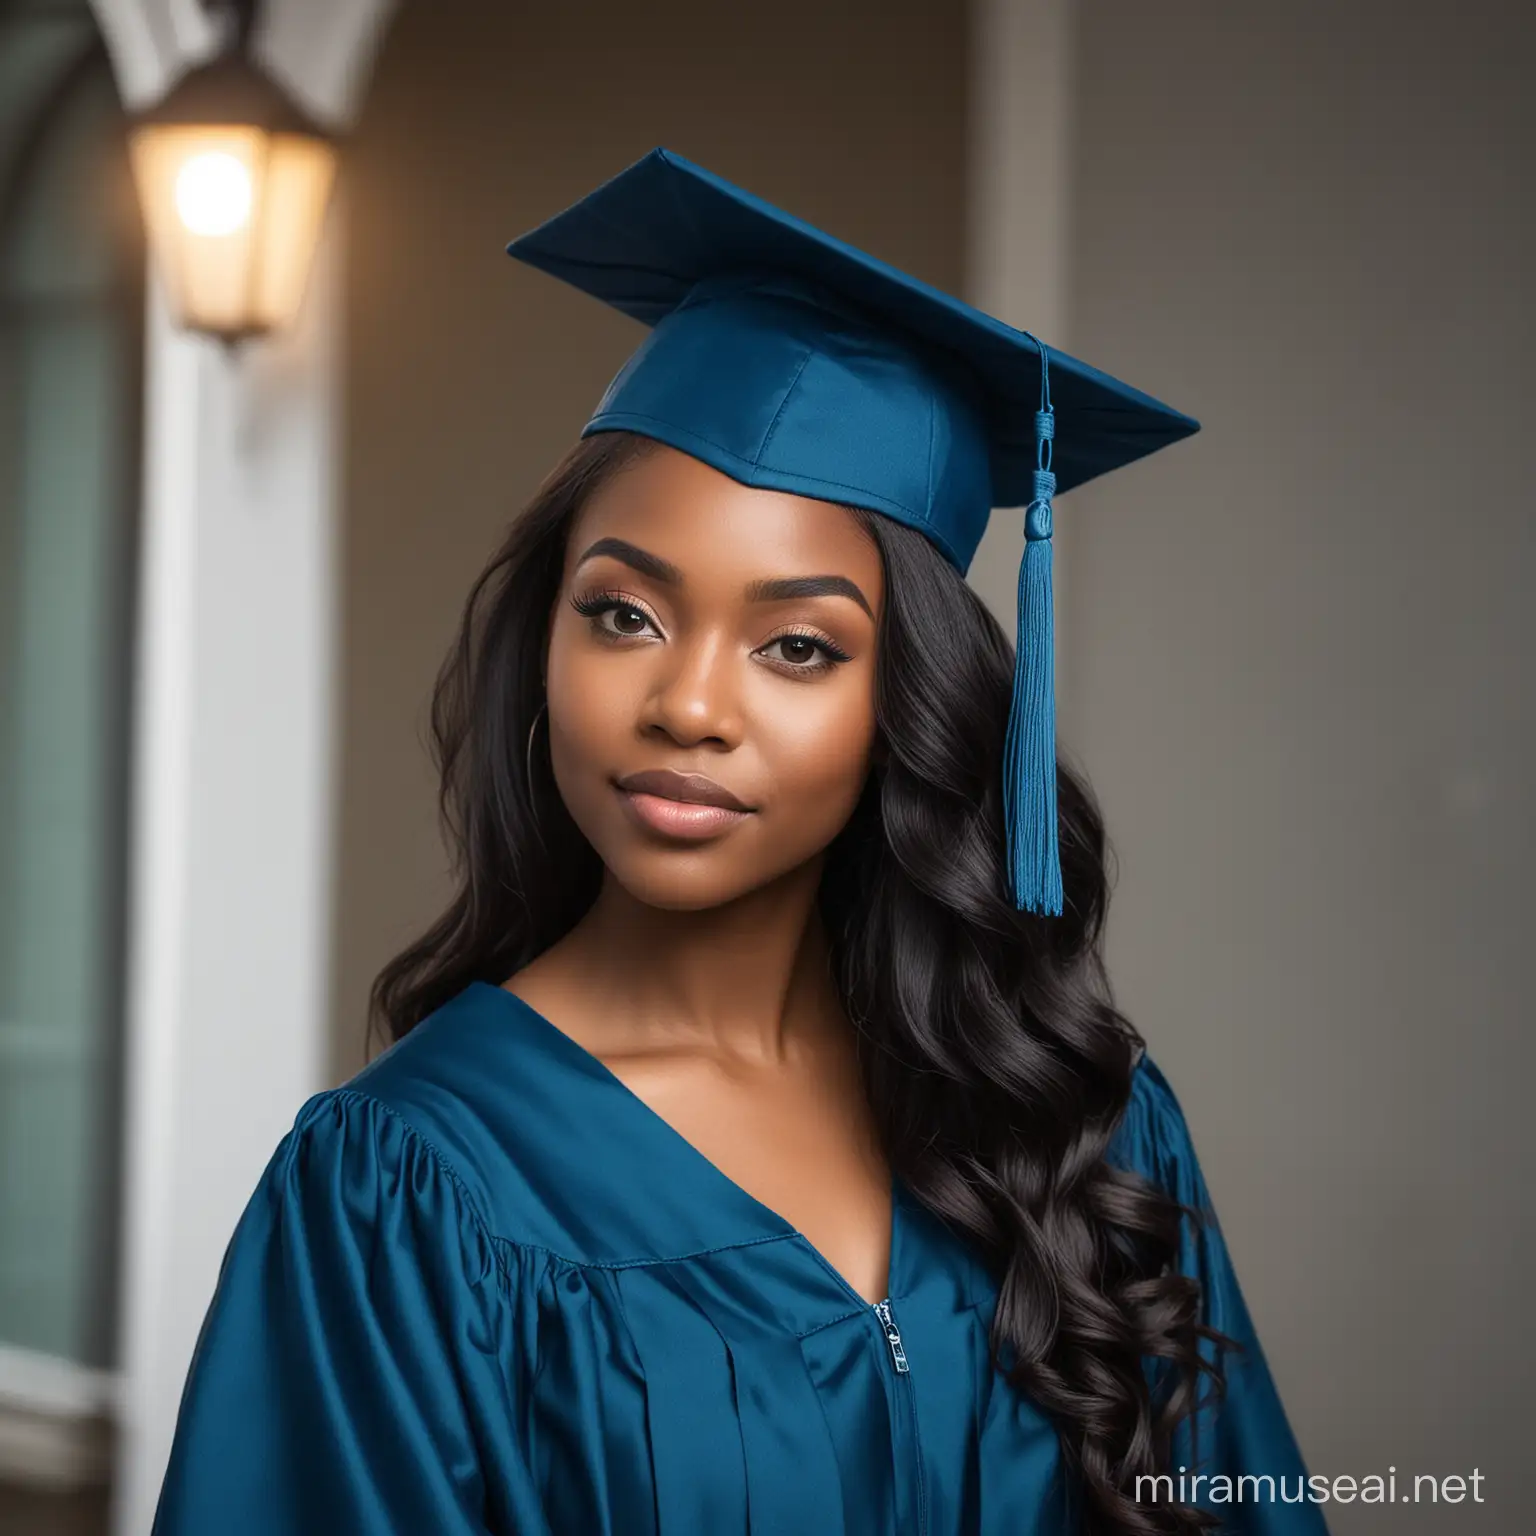 Elegant Black Woman in Graduation Attire with Soft Lighting